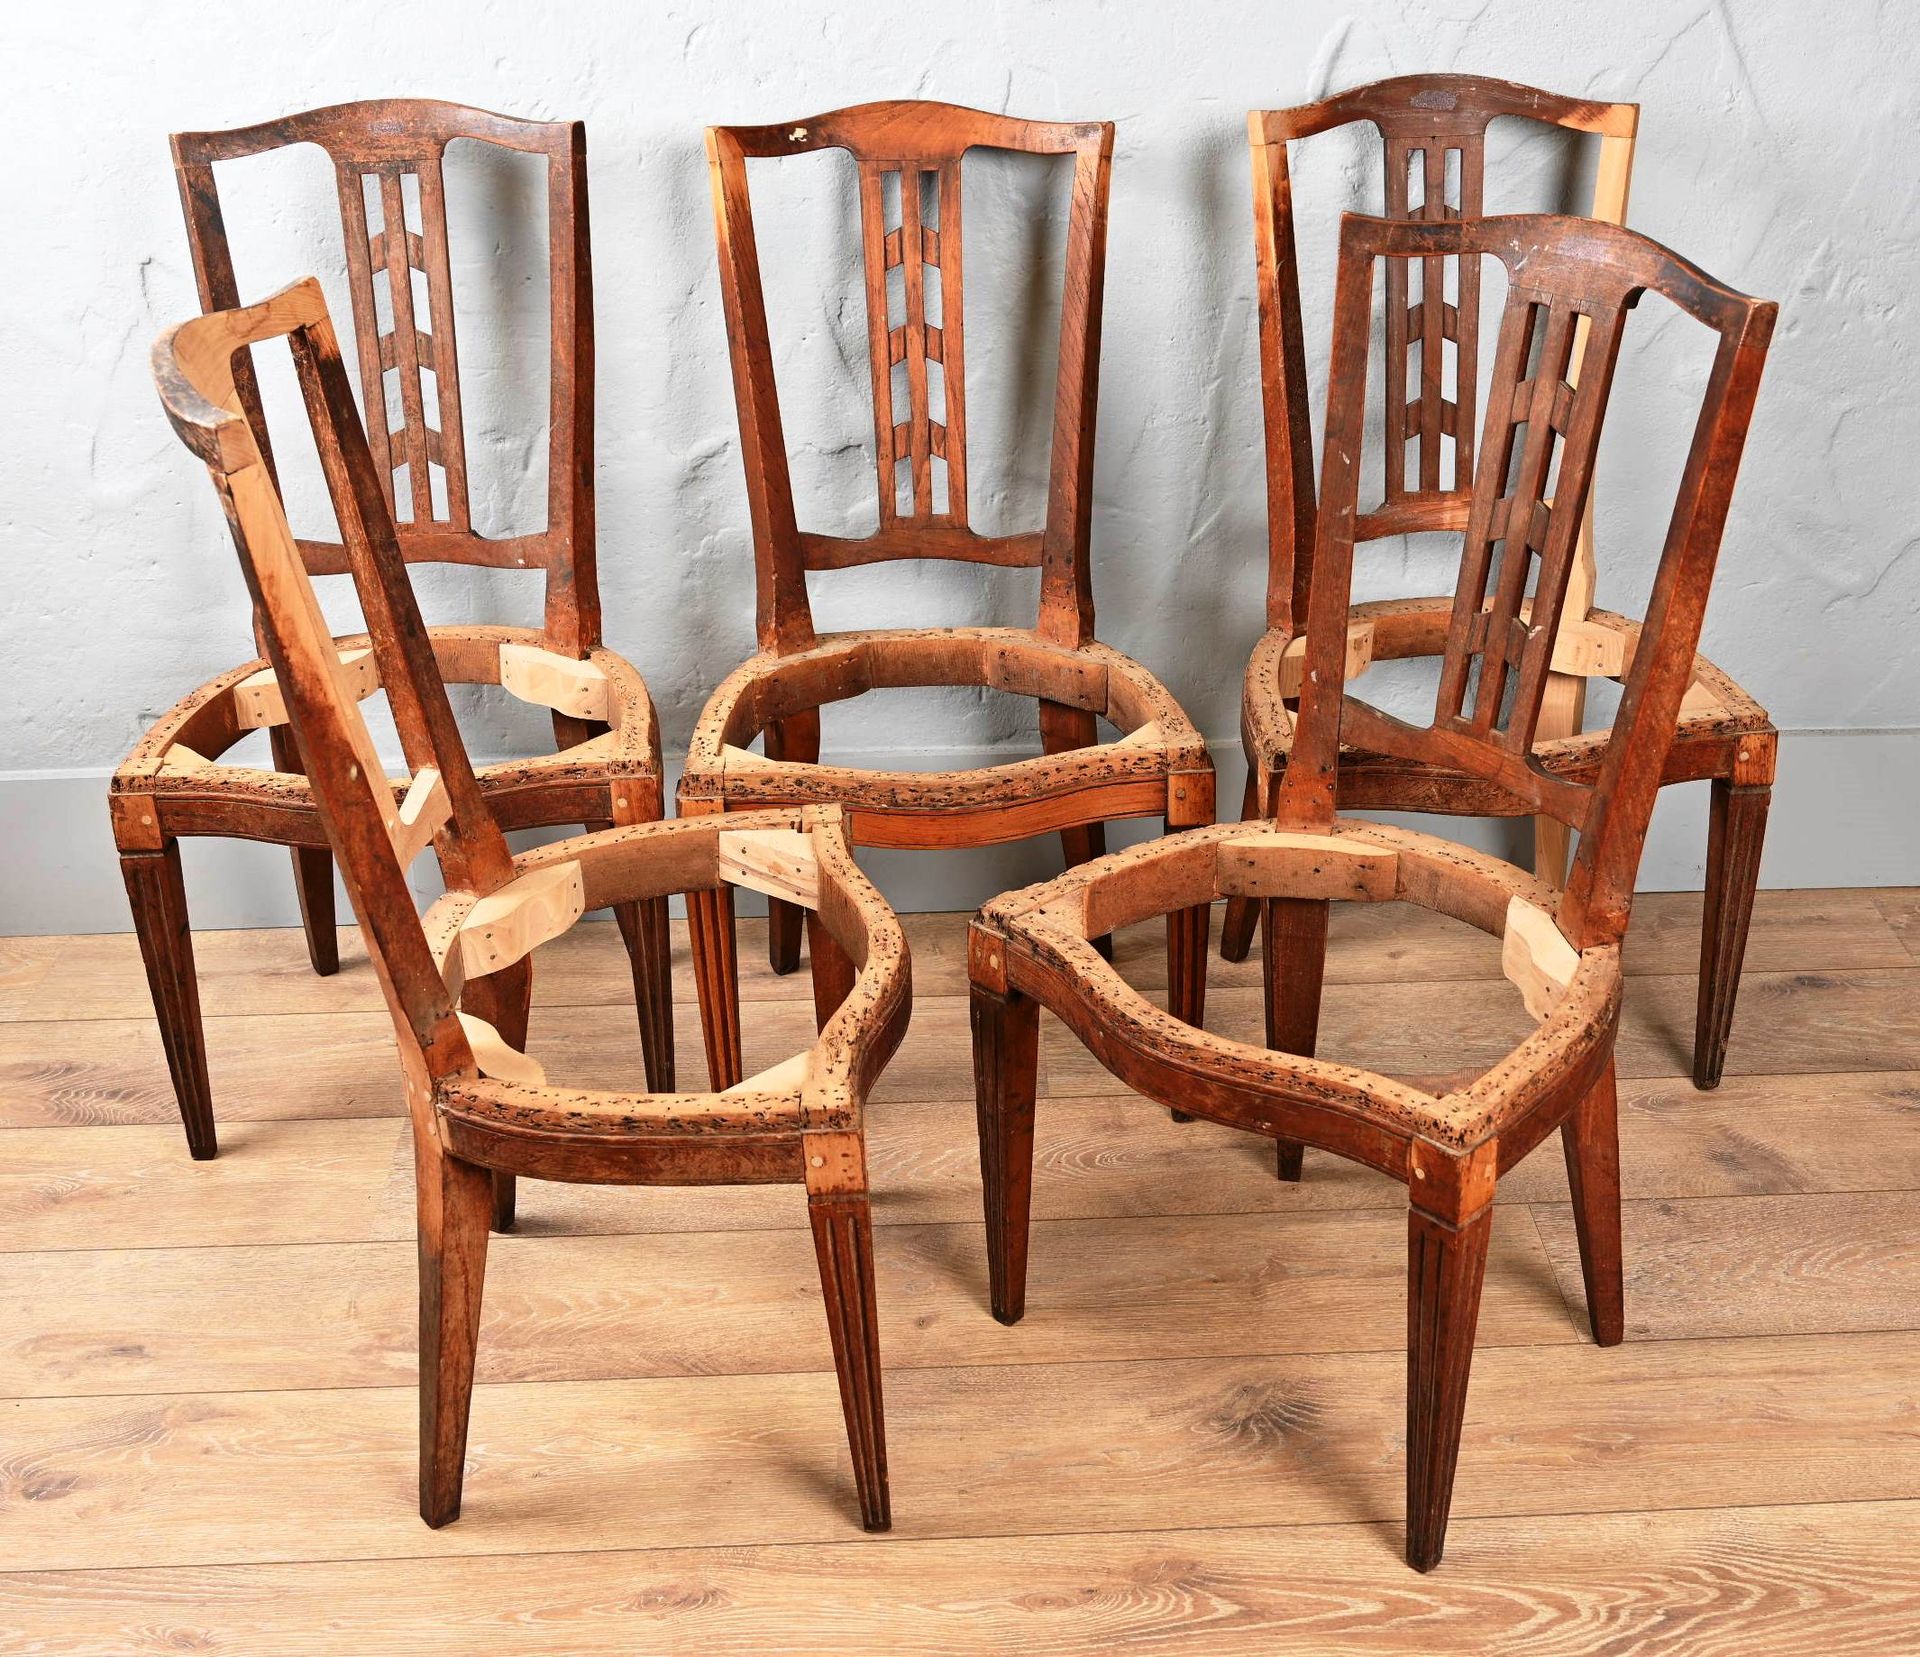 Suite de 5 chaises de style Louis XVI. Conjunto de 5 sillas de estilo Luis XVI.
&hellip;